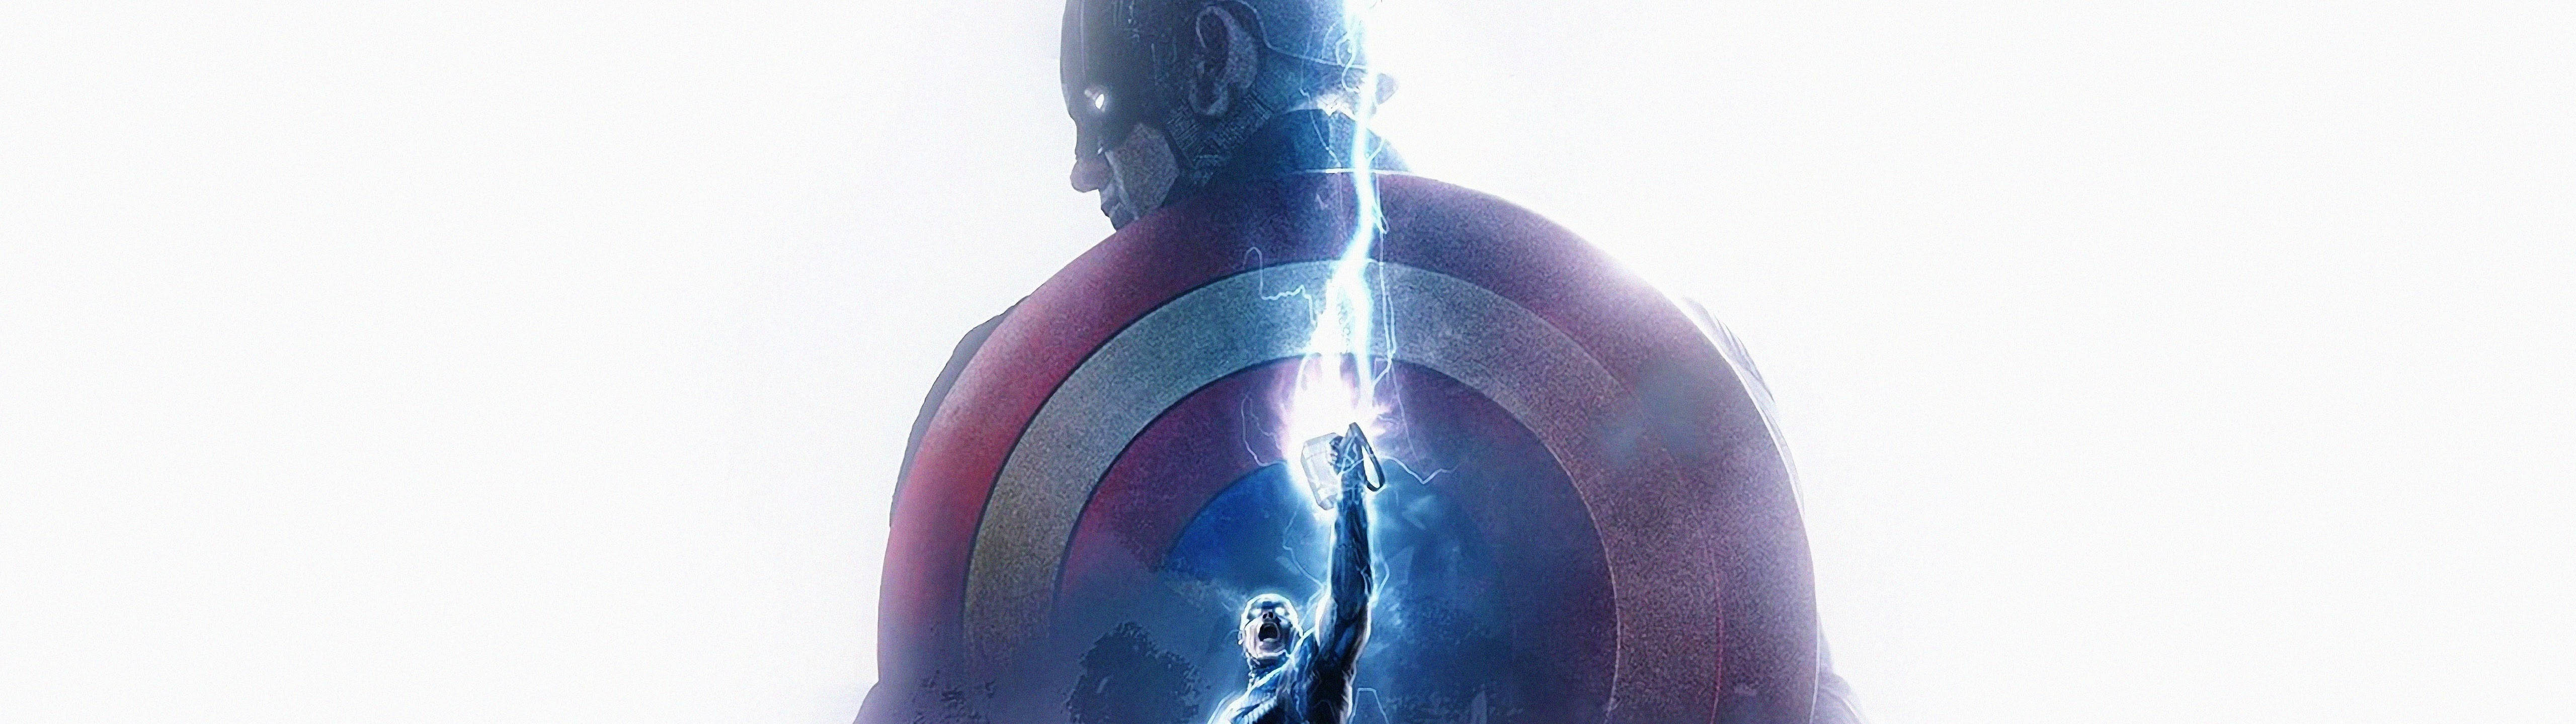 Marvel's Captain America With Mjolnir 5120 X 1440 Background